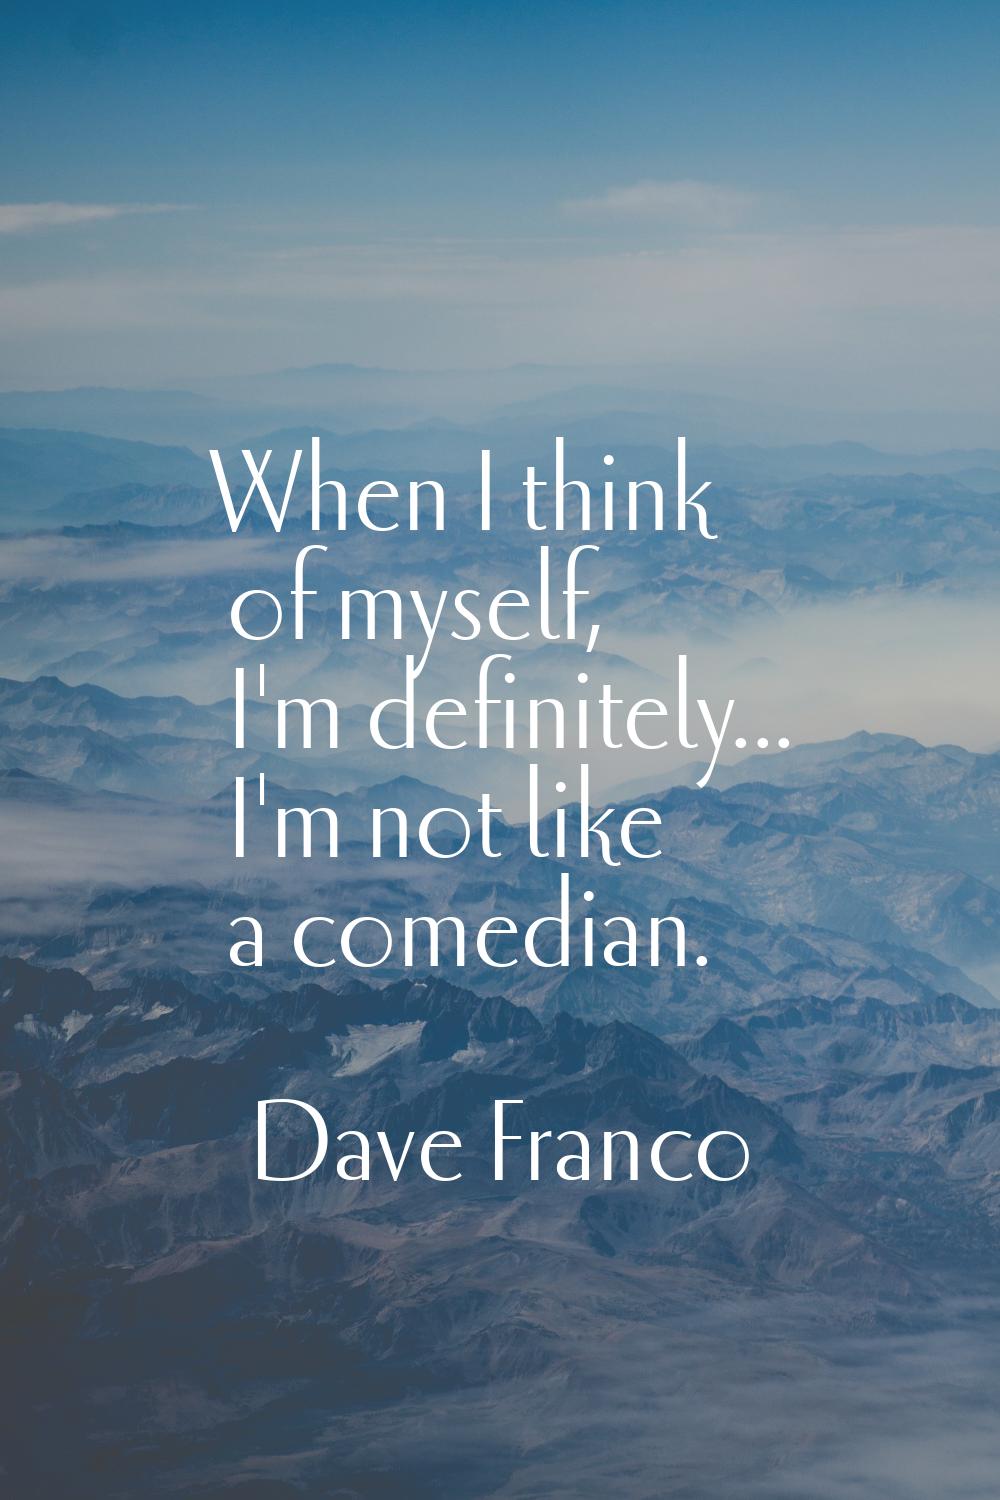 When I think of myself, I'm definitely... I'm not like a comedian.